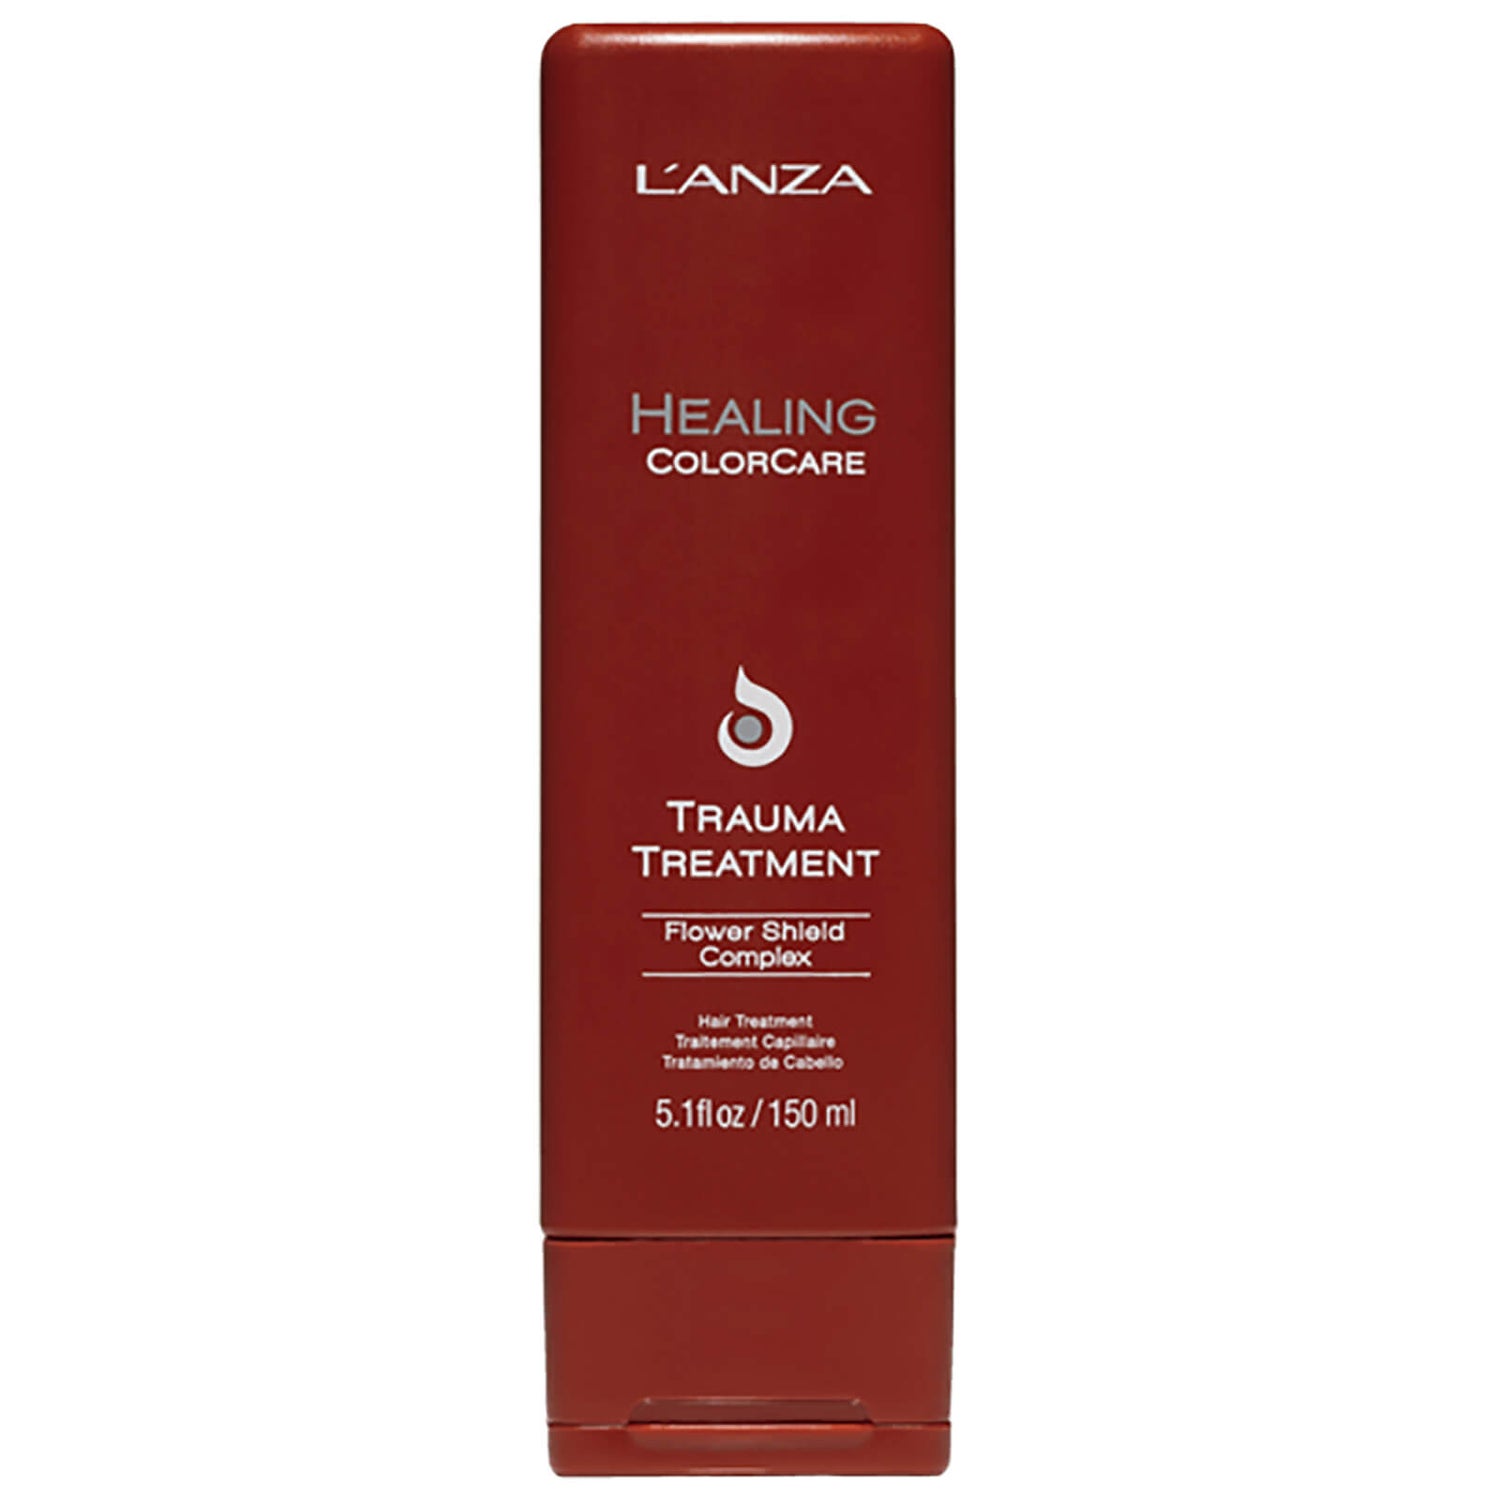 L'Anza Healing Colorcare Trauma Treatment (150 ml)